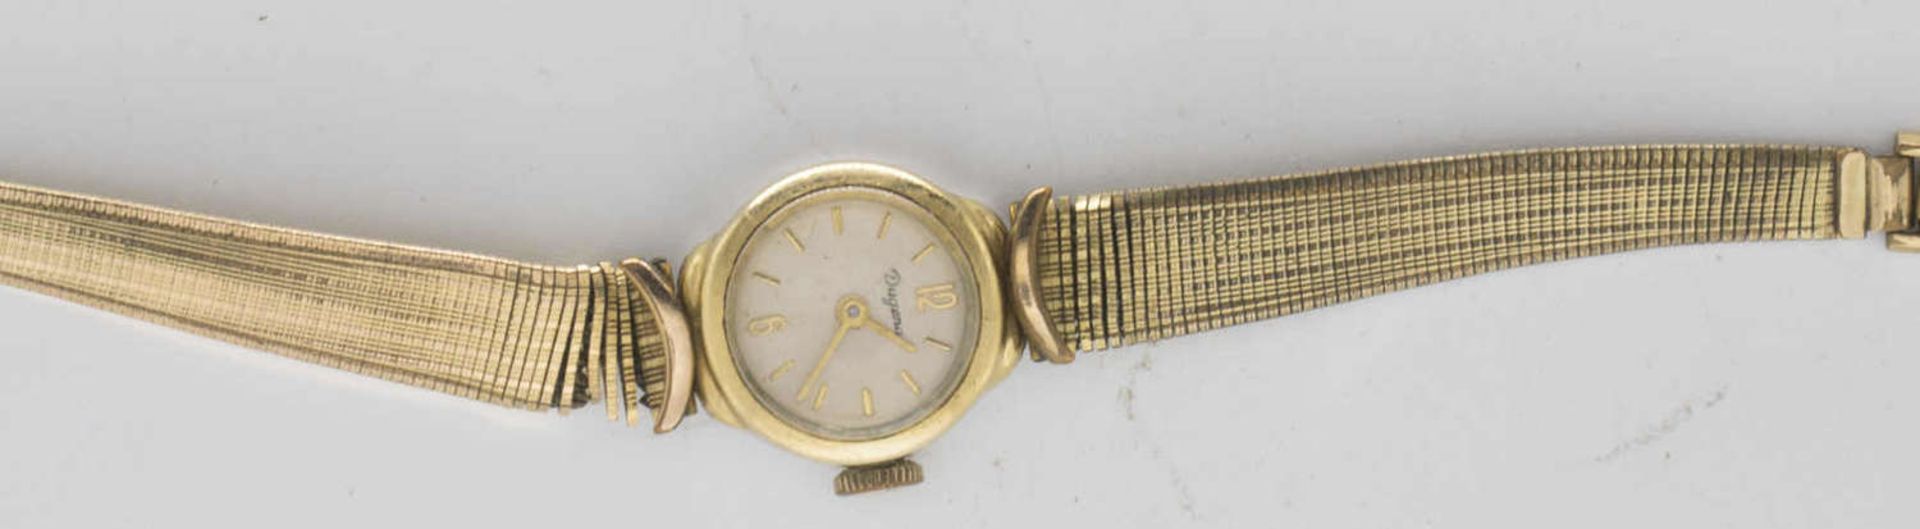 Dugena women's wristwatch, gold-plated. mechanically. The clock starts.